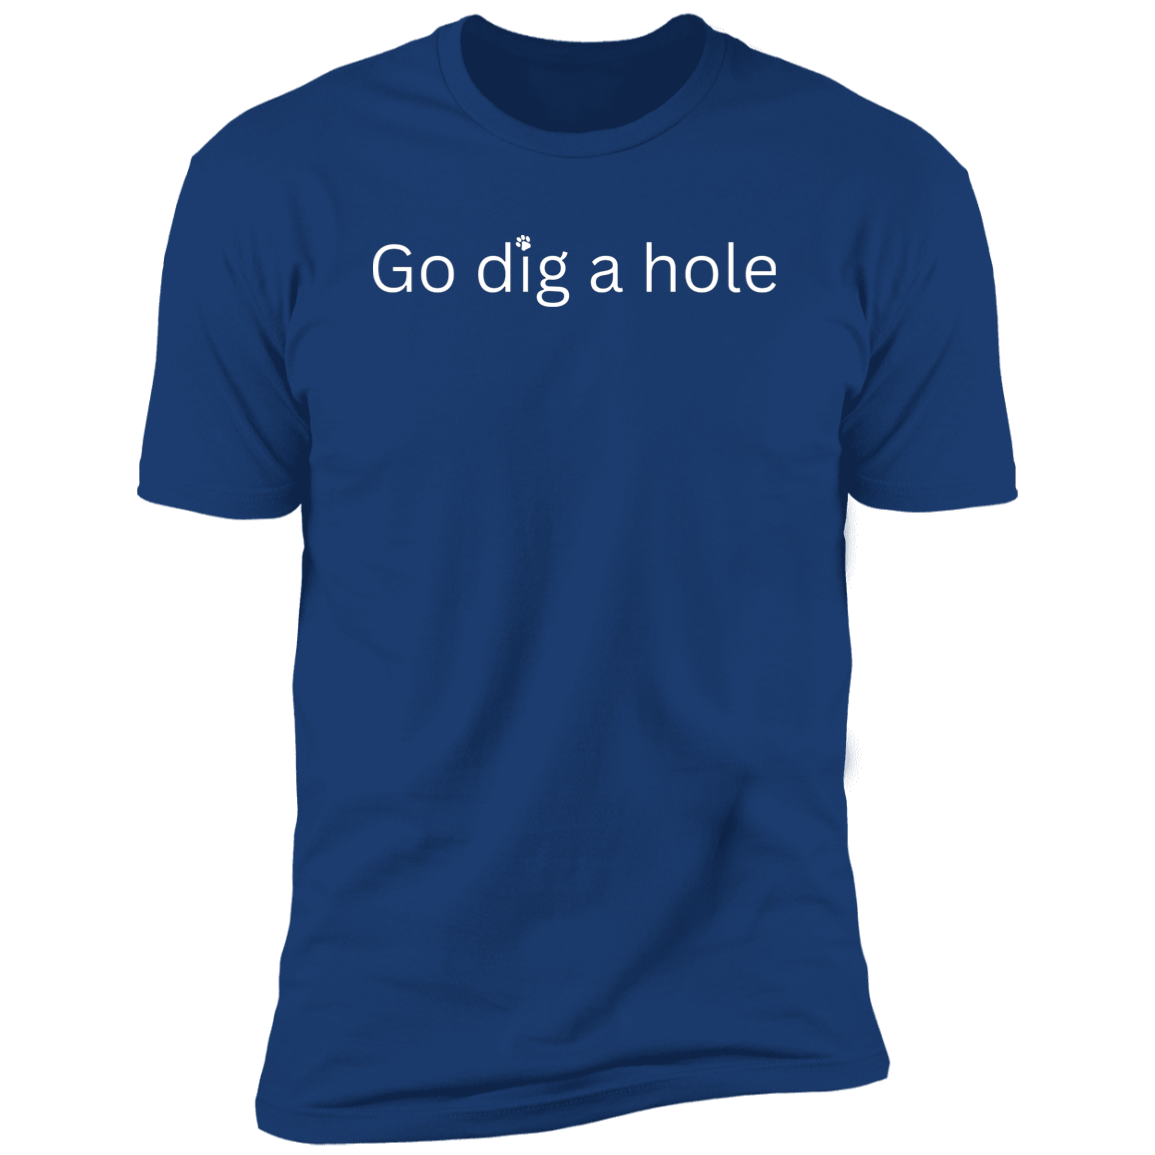 Go Dig a Hole Dog T-Shirt, Dog shirt for humans, funny dog shirt, funny t-shirt, in royal blue